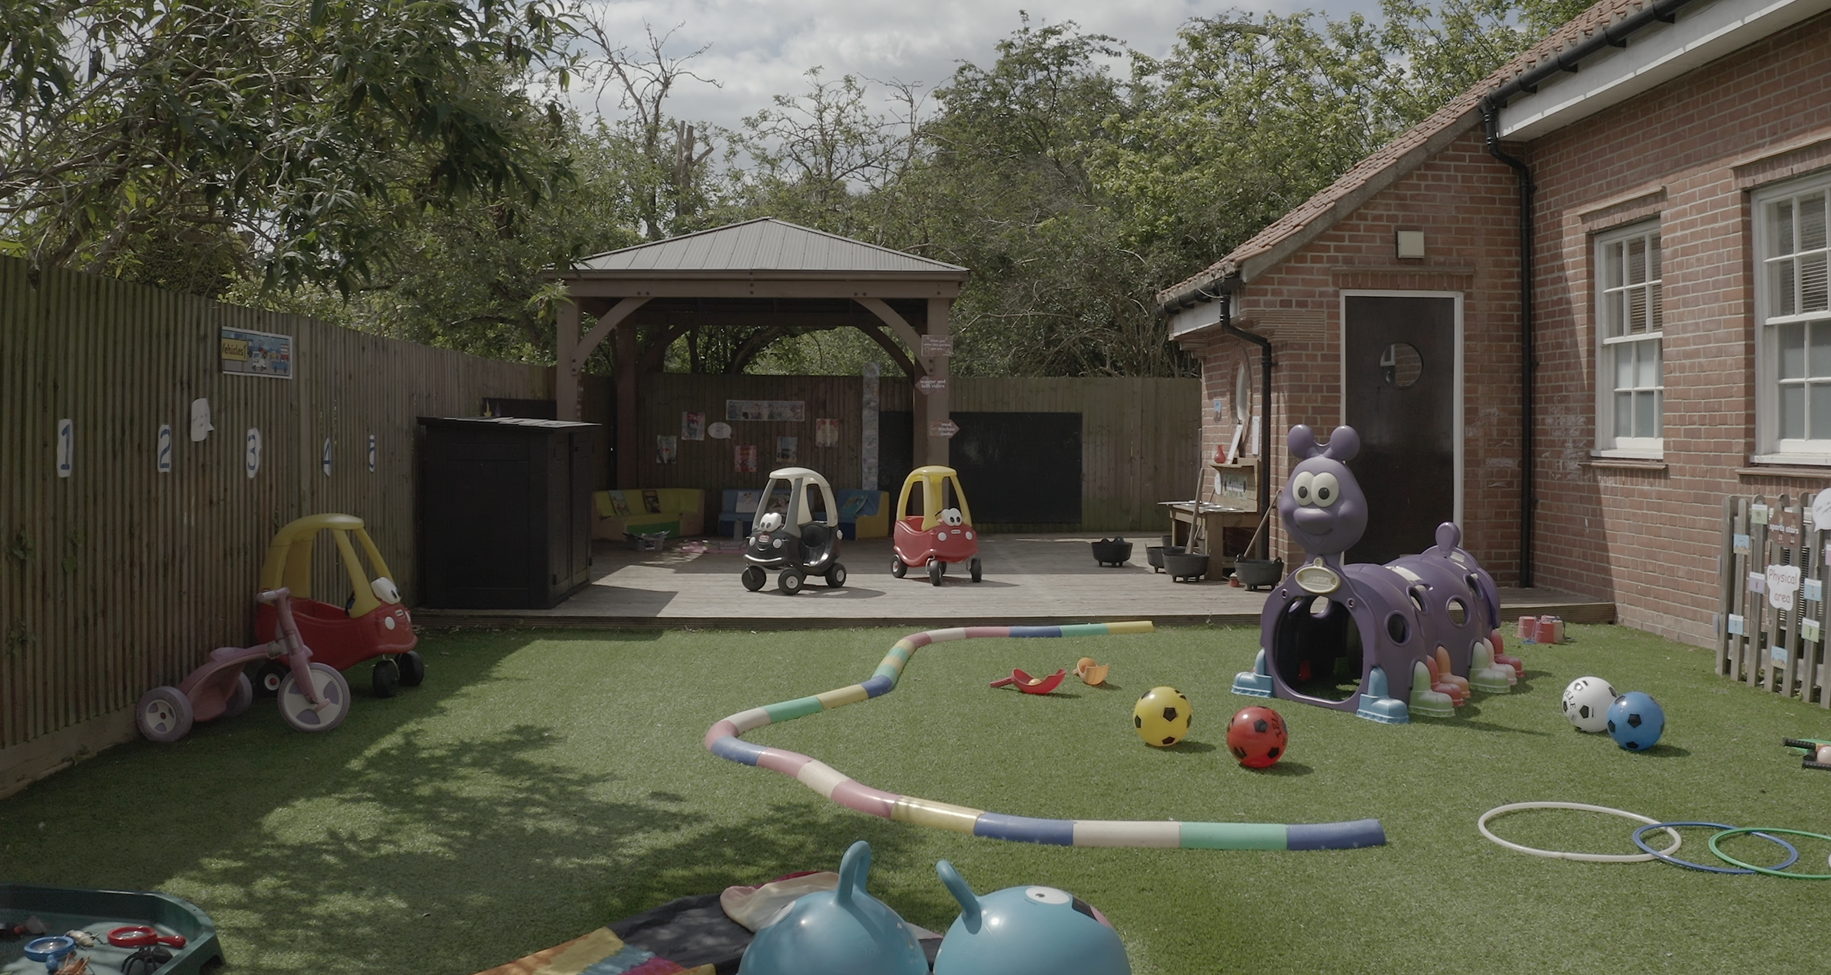 Playschool Nursery Welwyn Garden City - Garden